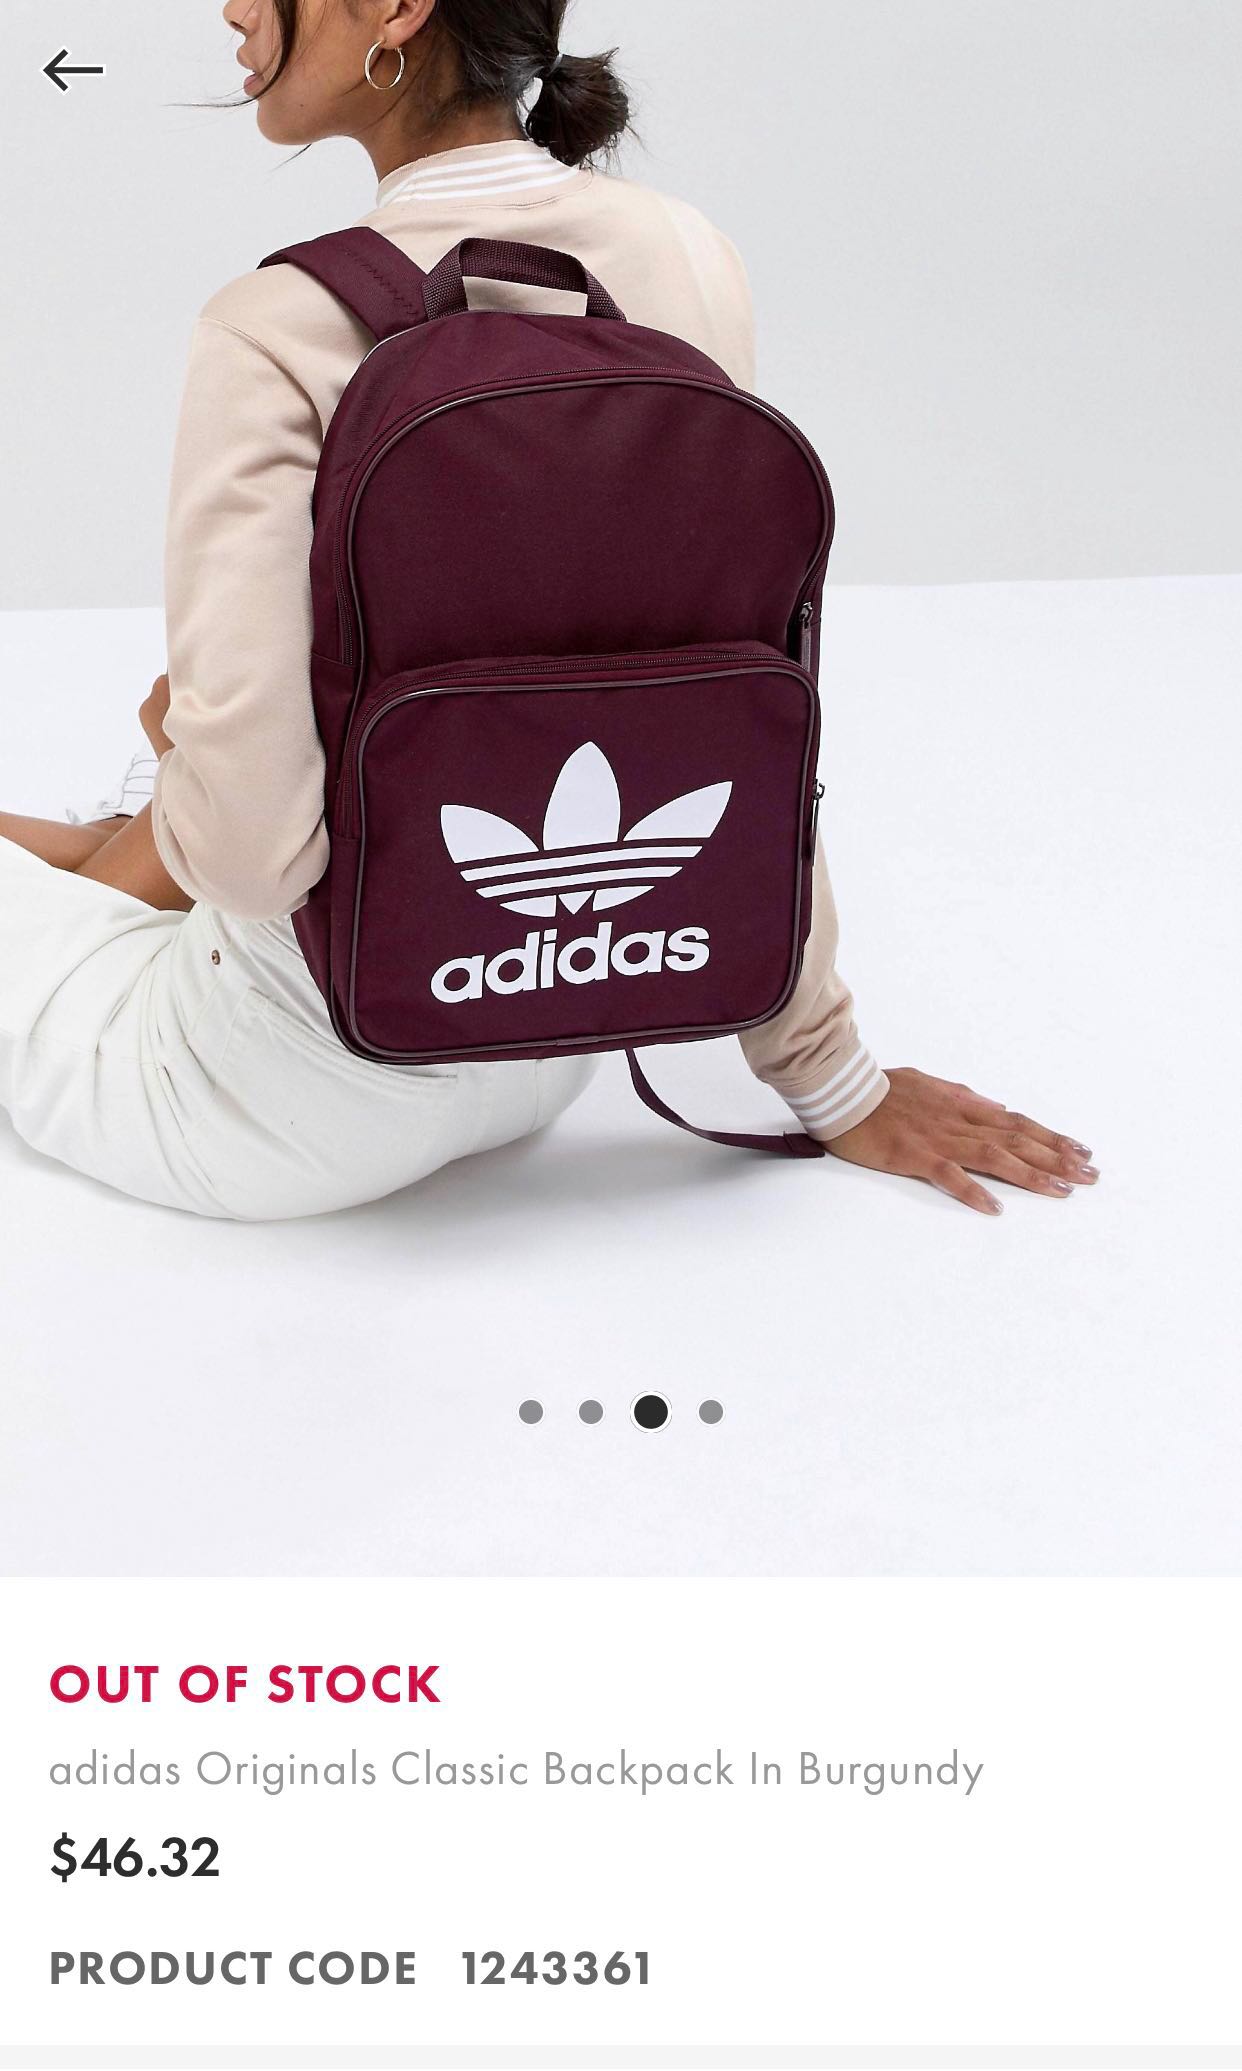 Adidas backpack in Burgundy, Women's 